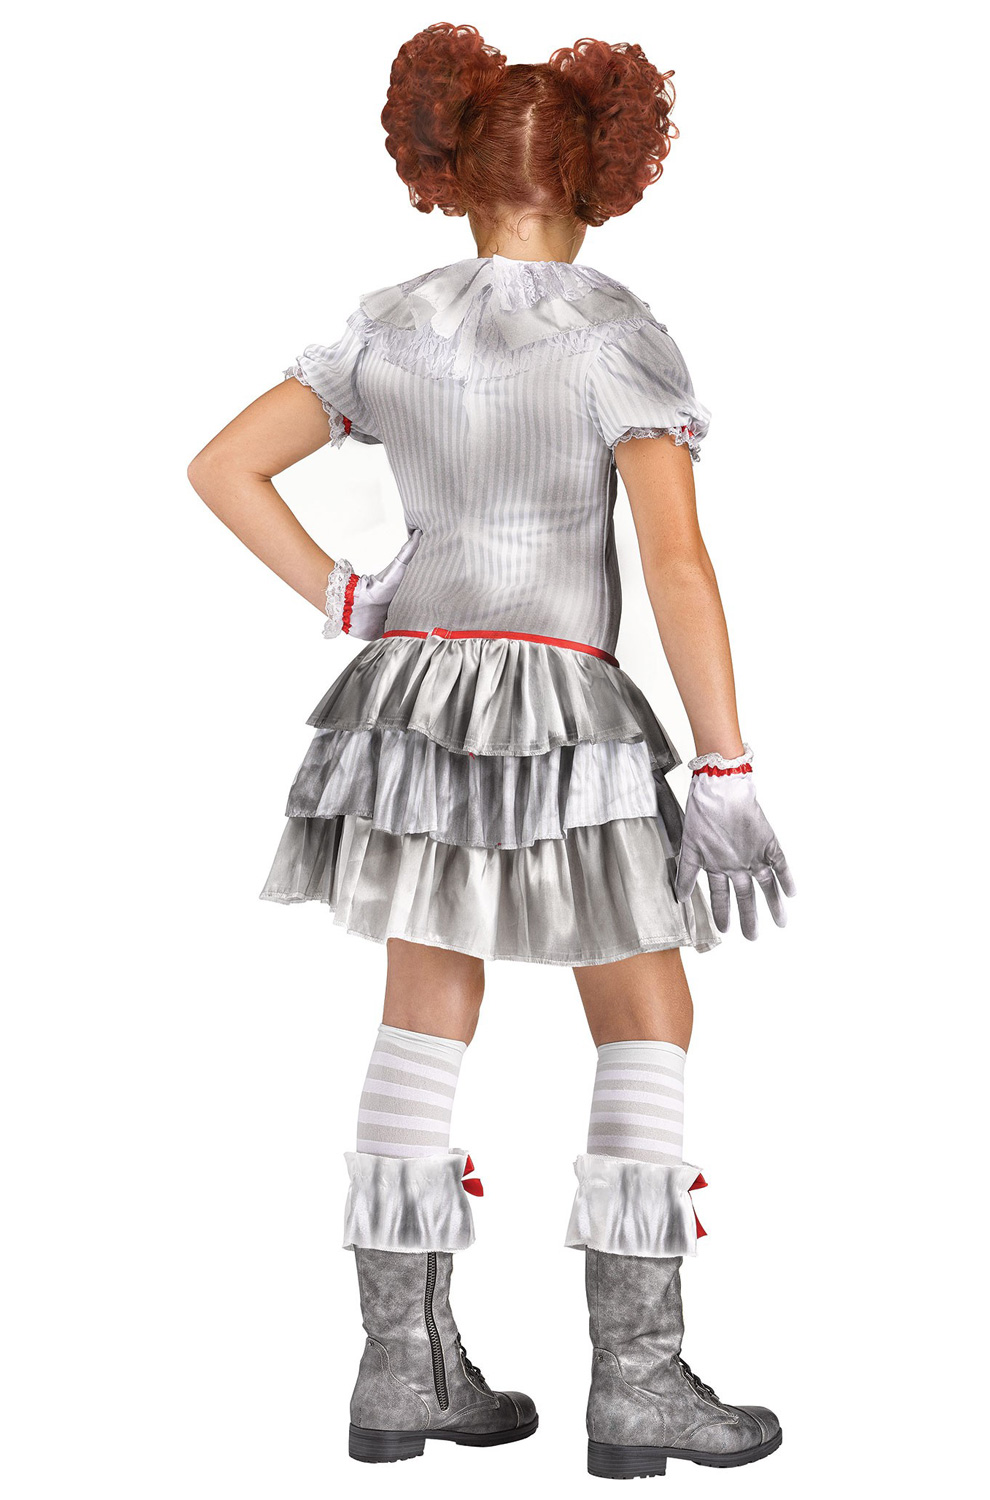 Fun World Costumes Carnevil Clown Girl's Halloween Fancy-Dress Costume, Regular L (12-14) - image 2 of 2